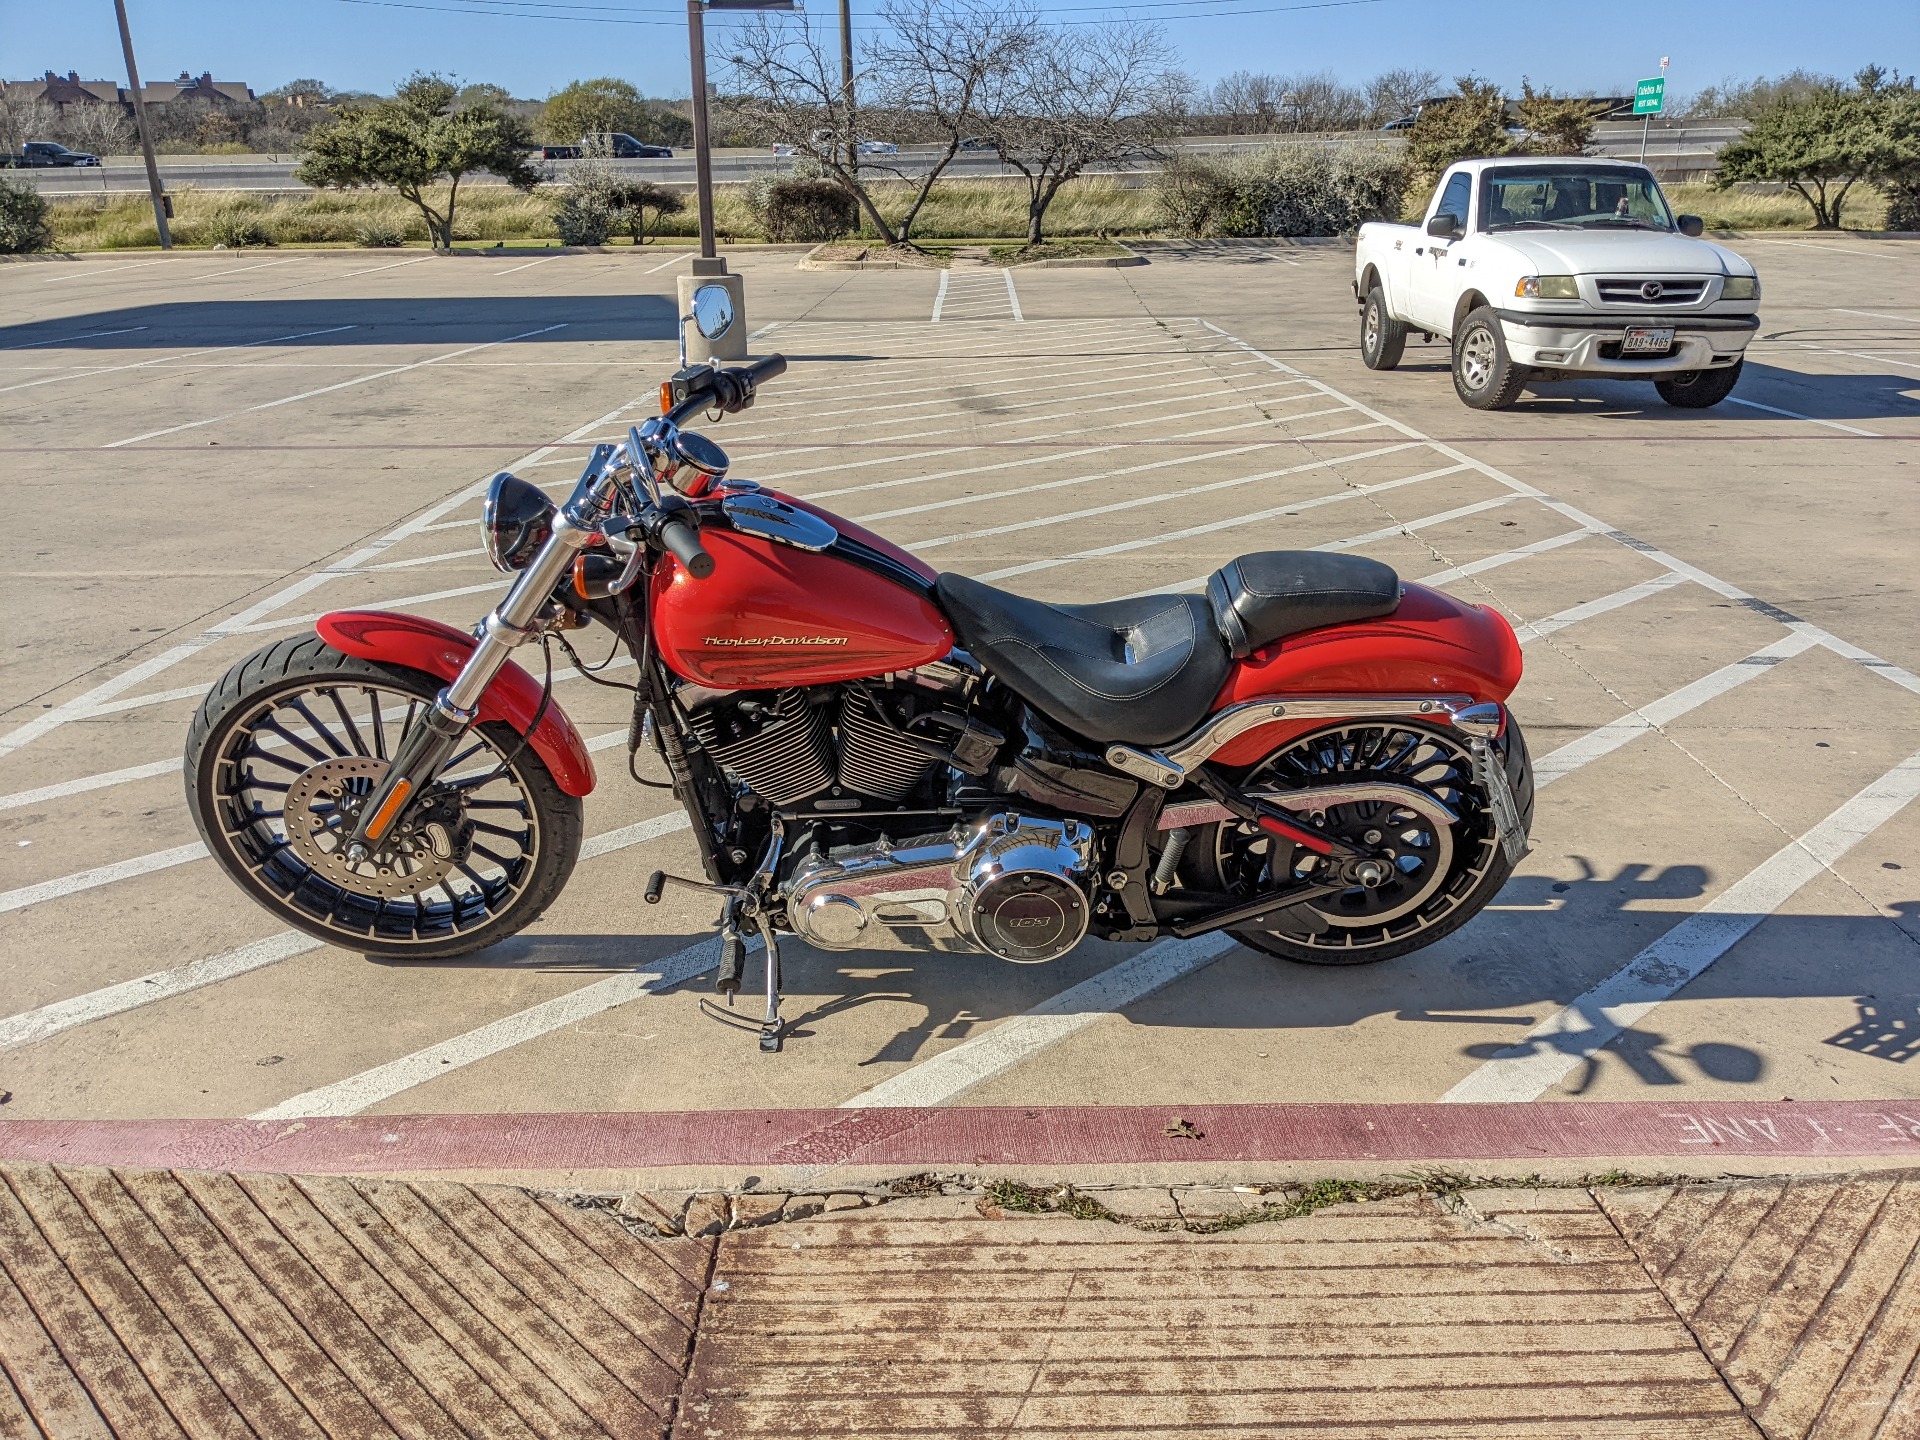 2017 Harley-Davidson Breakout® in San Antonio, Texas - Photo 5